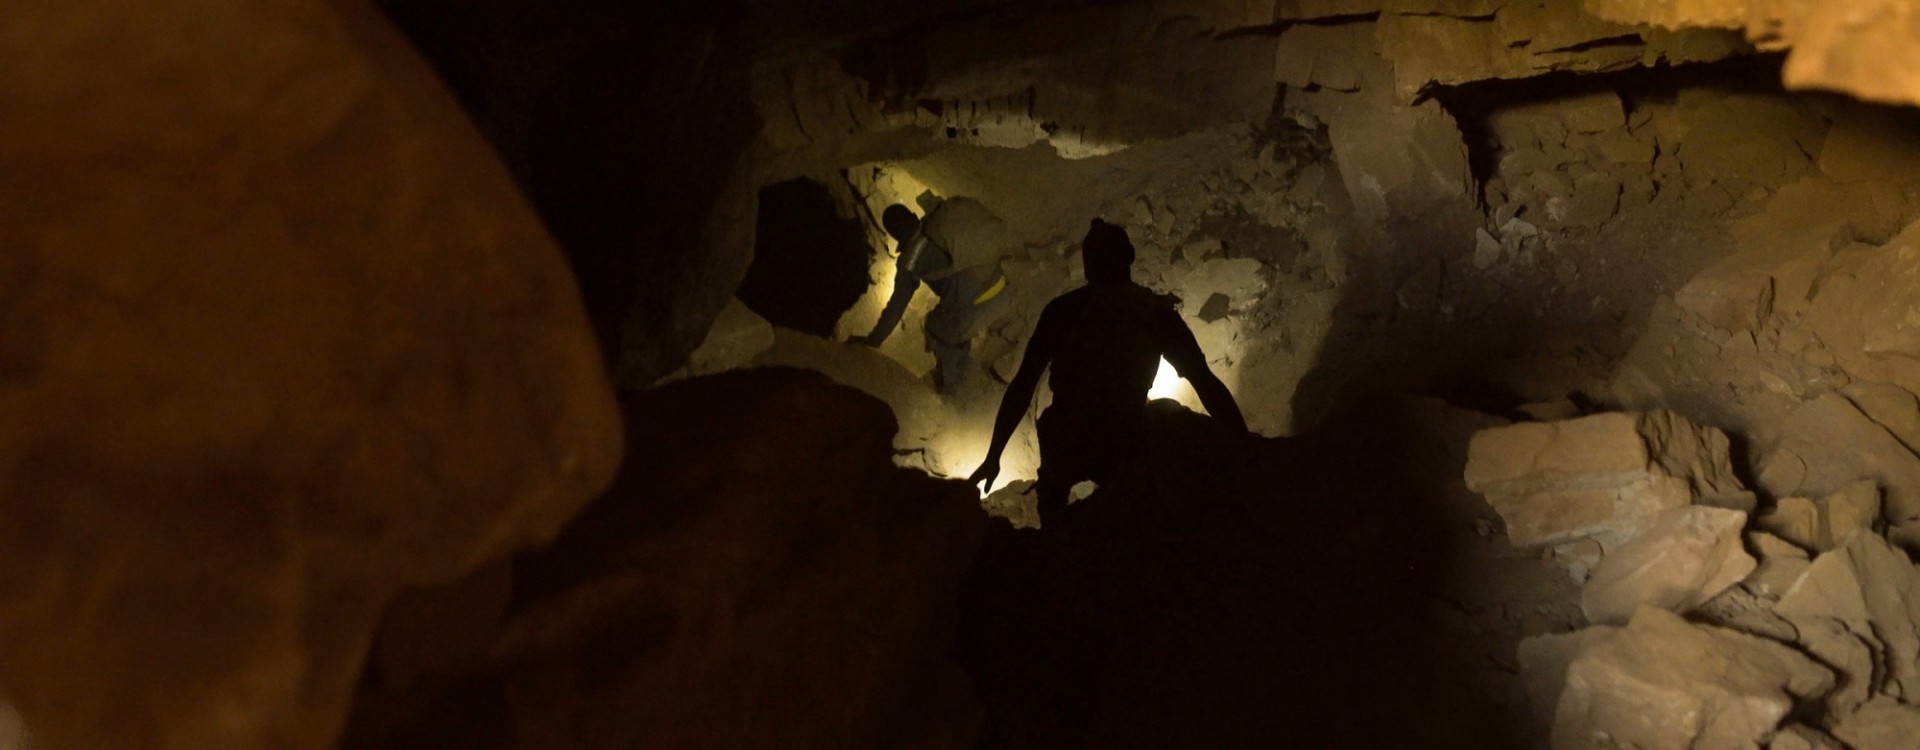 Still from 'We are Zama Zama' @ Rosalind C. Morris, men descending in gold mine